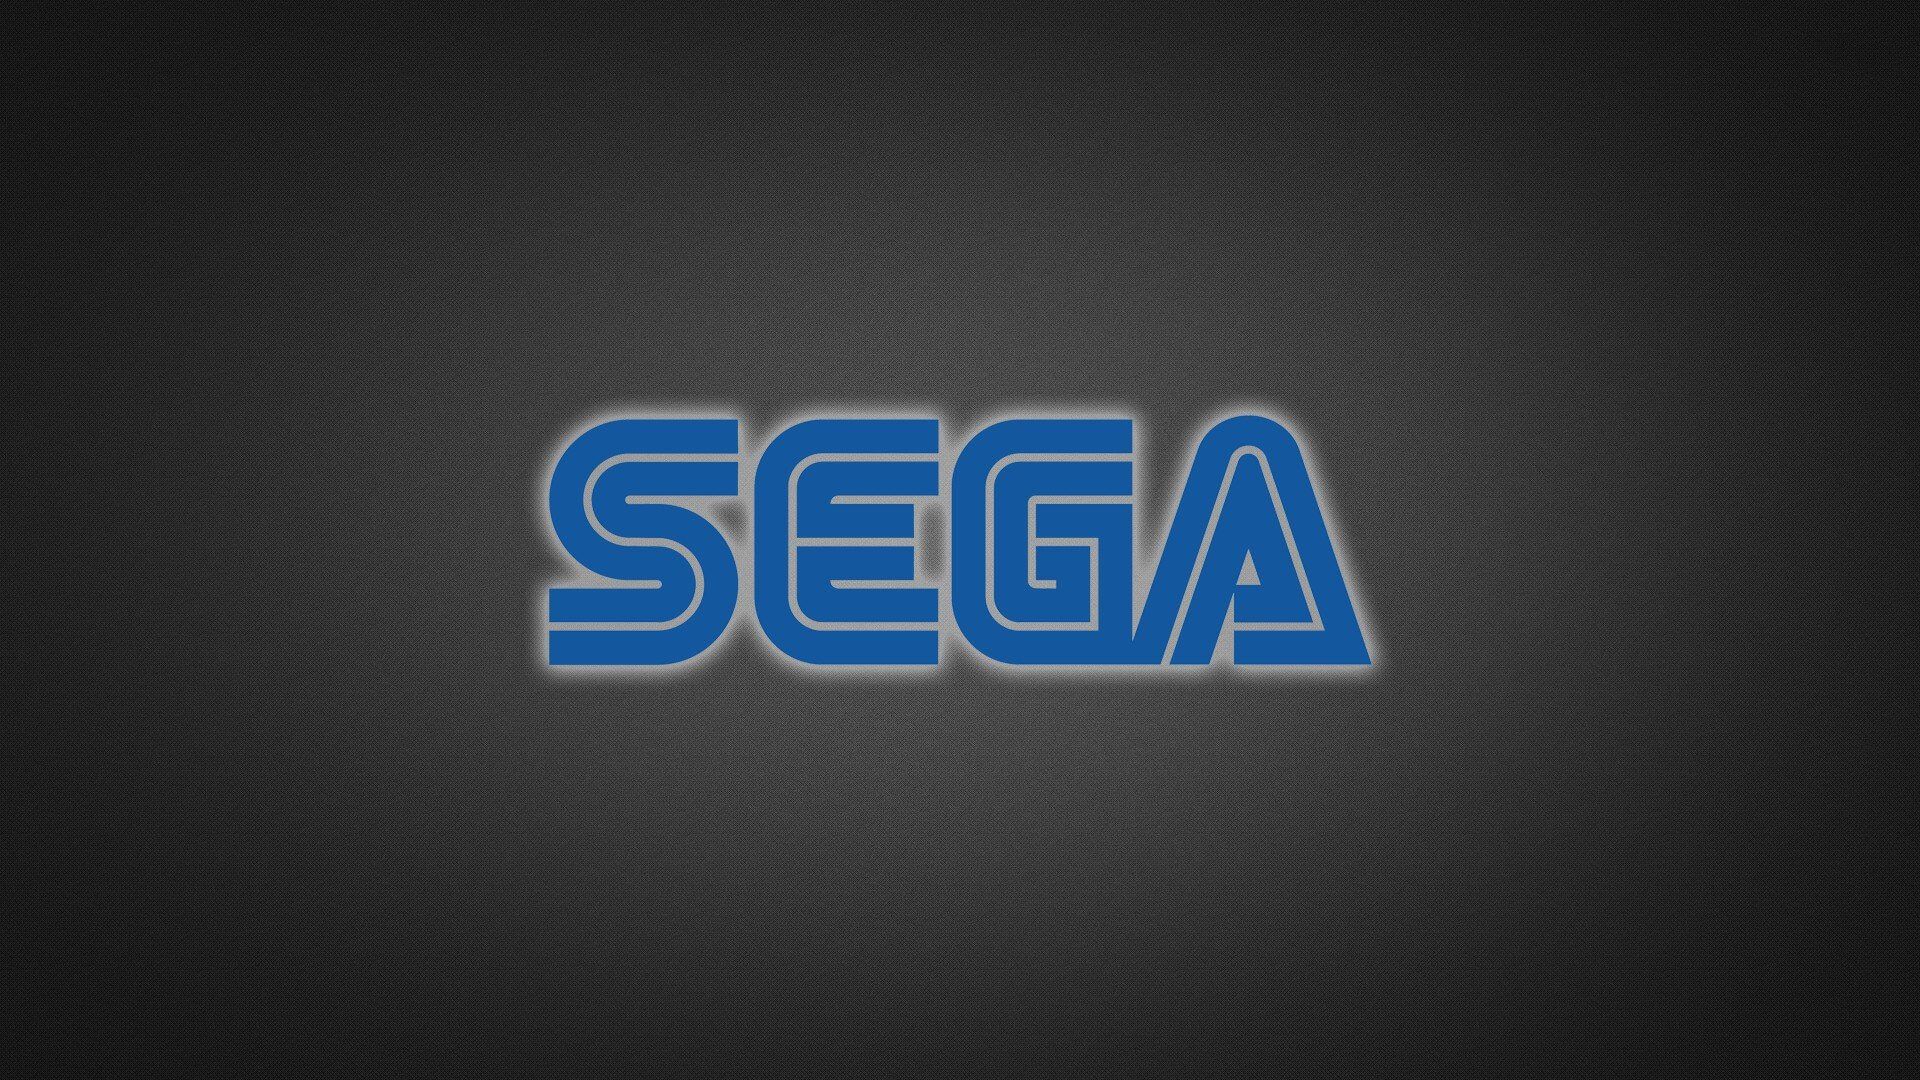 SEGA Registered New Trademarks, but no Virtua Fighter